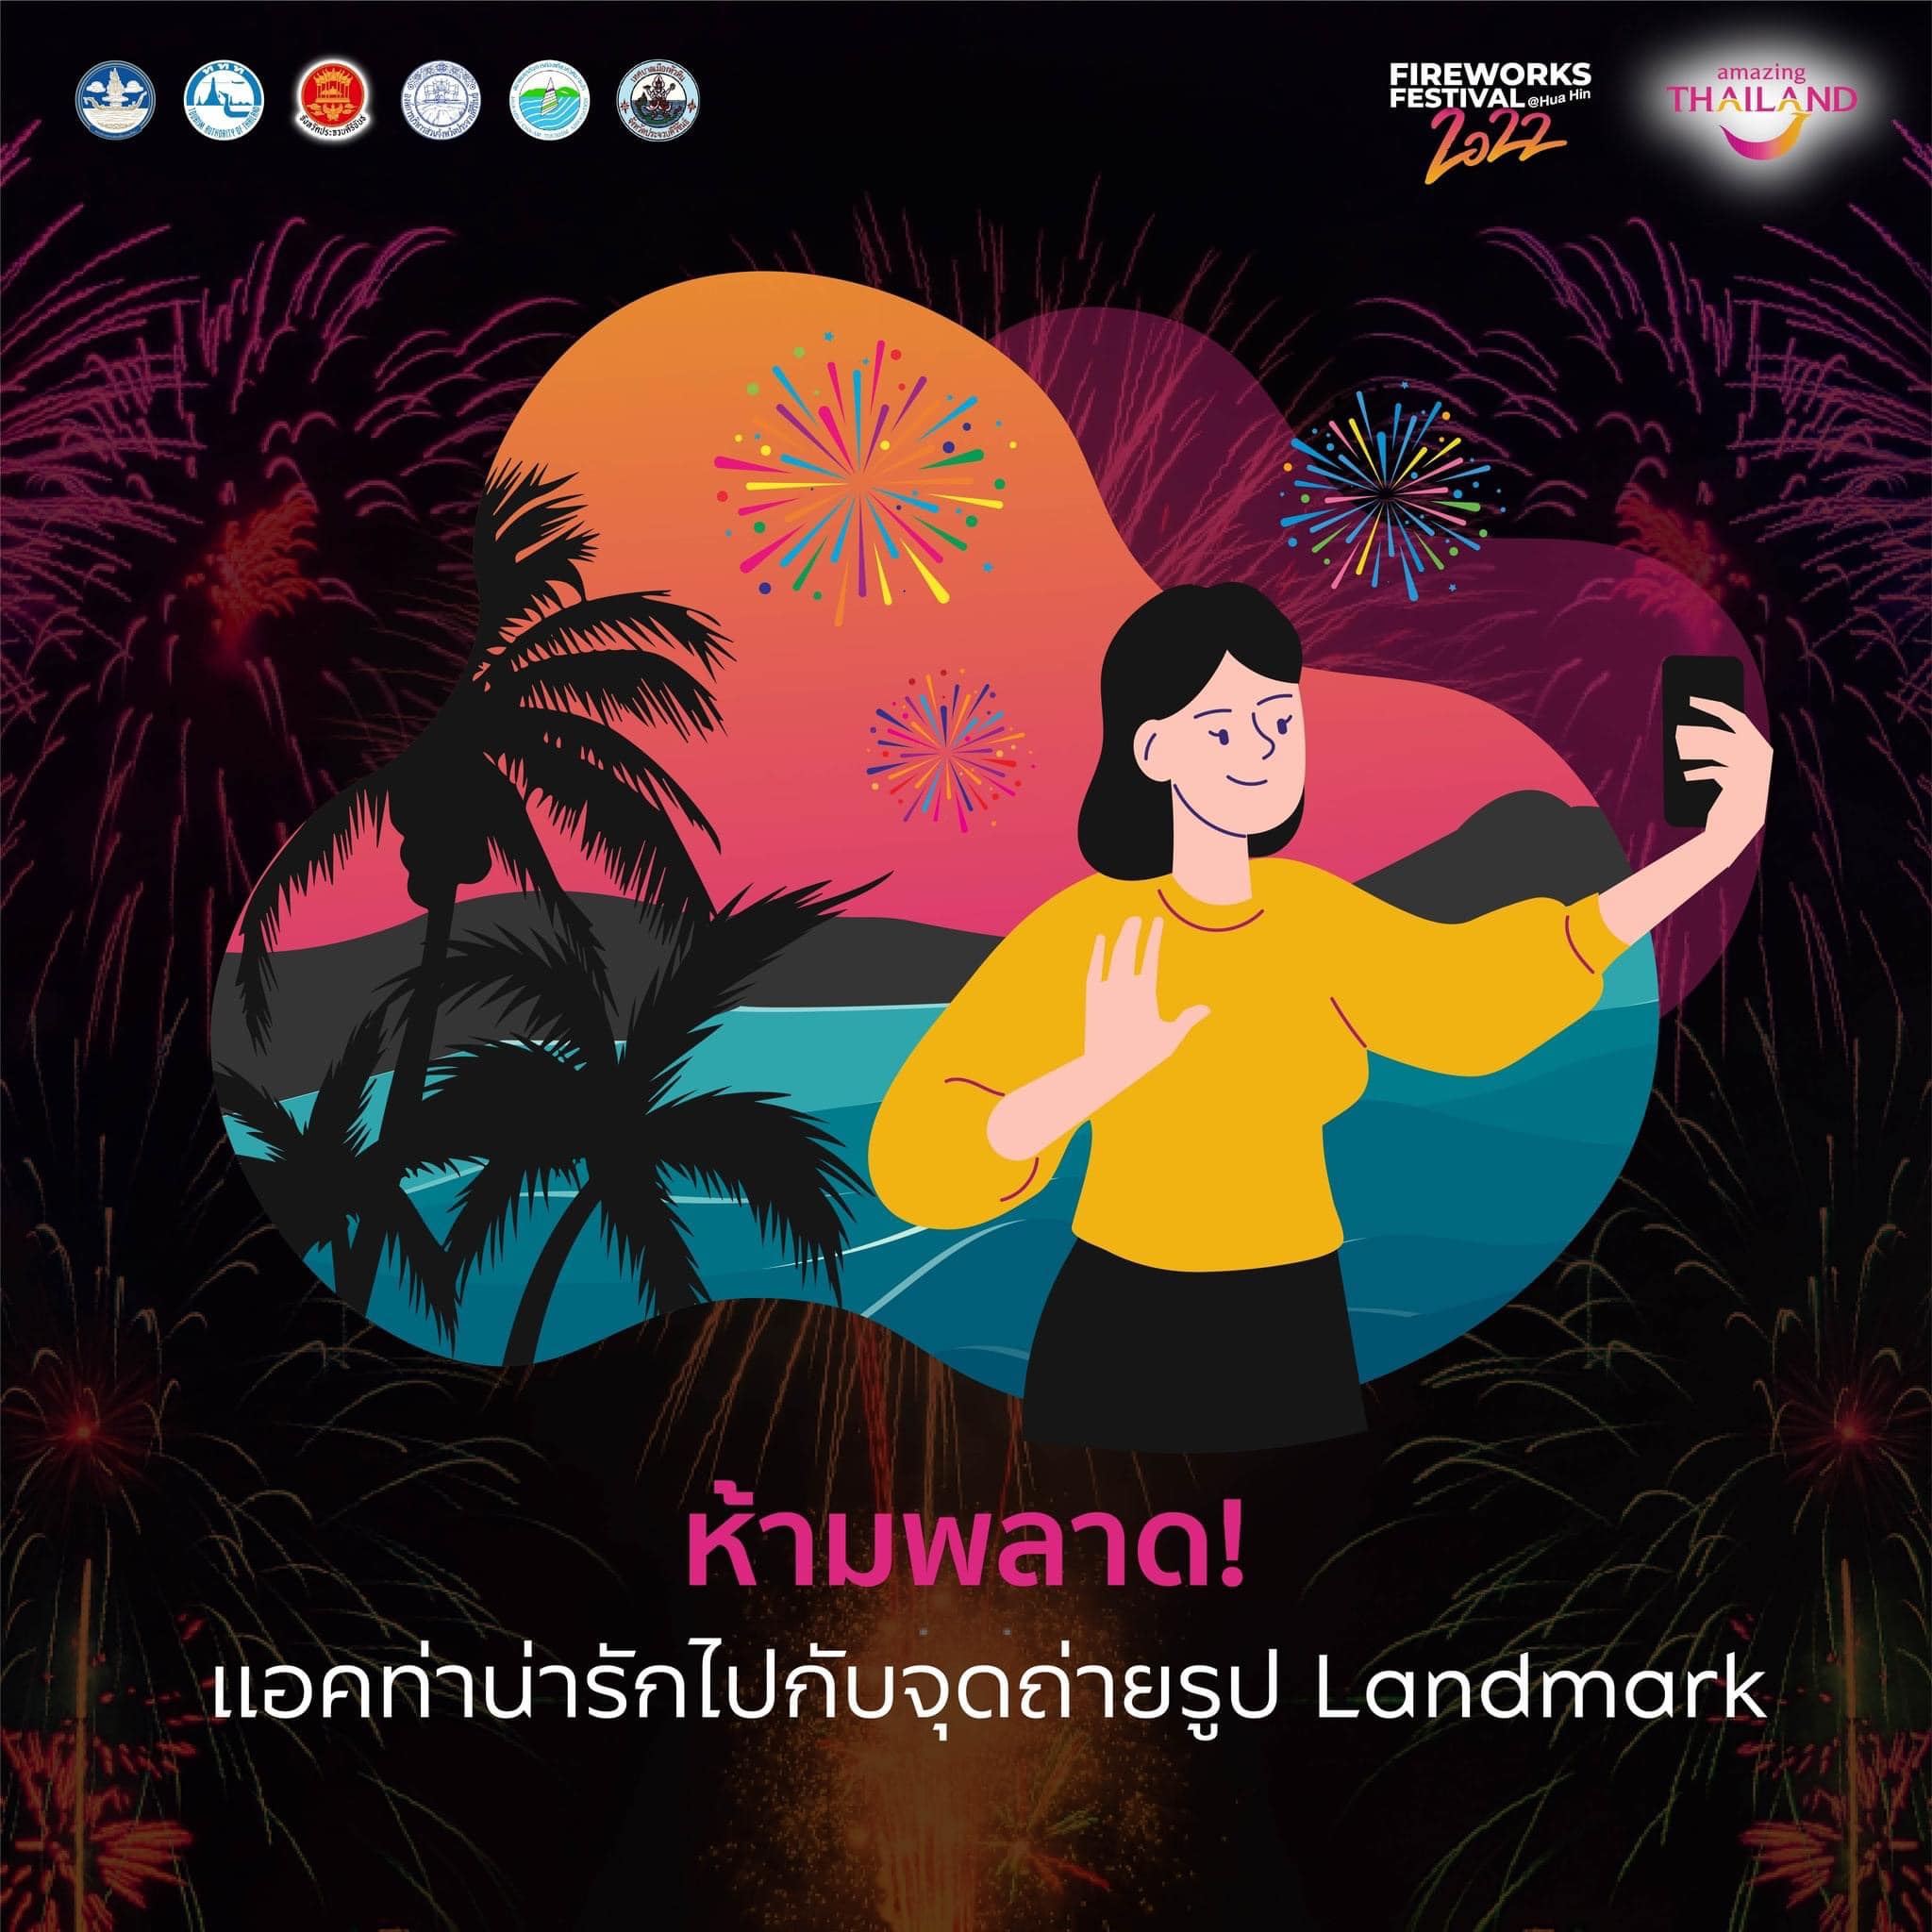 Amazing Thailand Fireworks Festival 2022 @Hua Hin